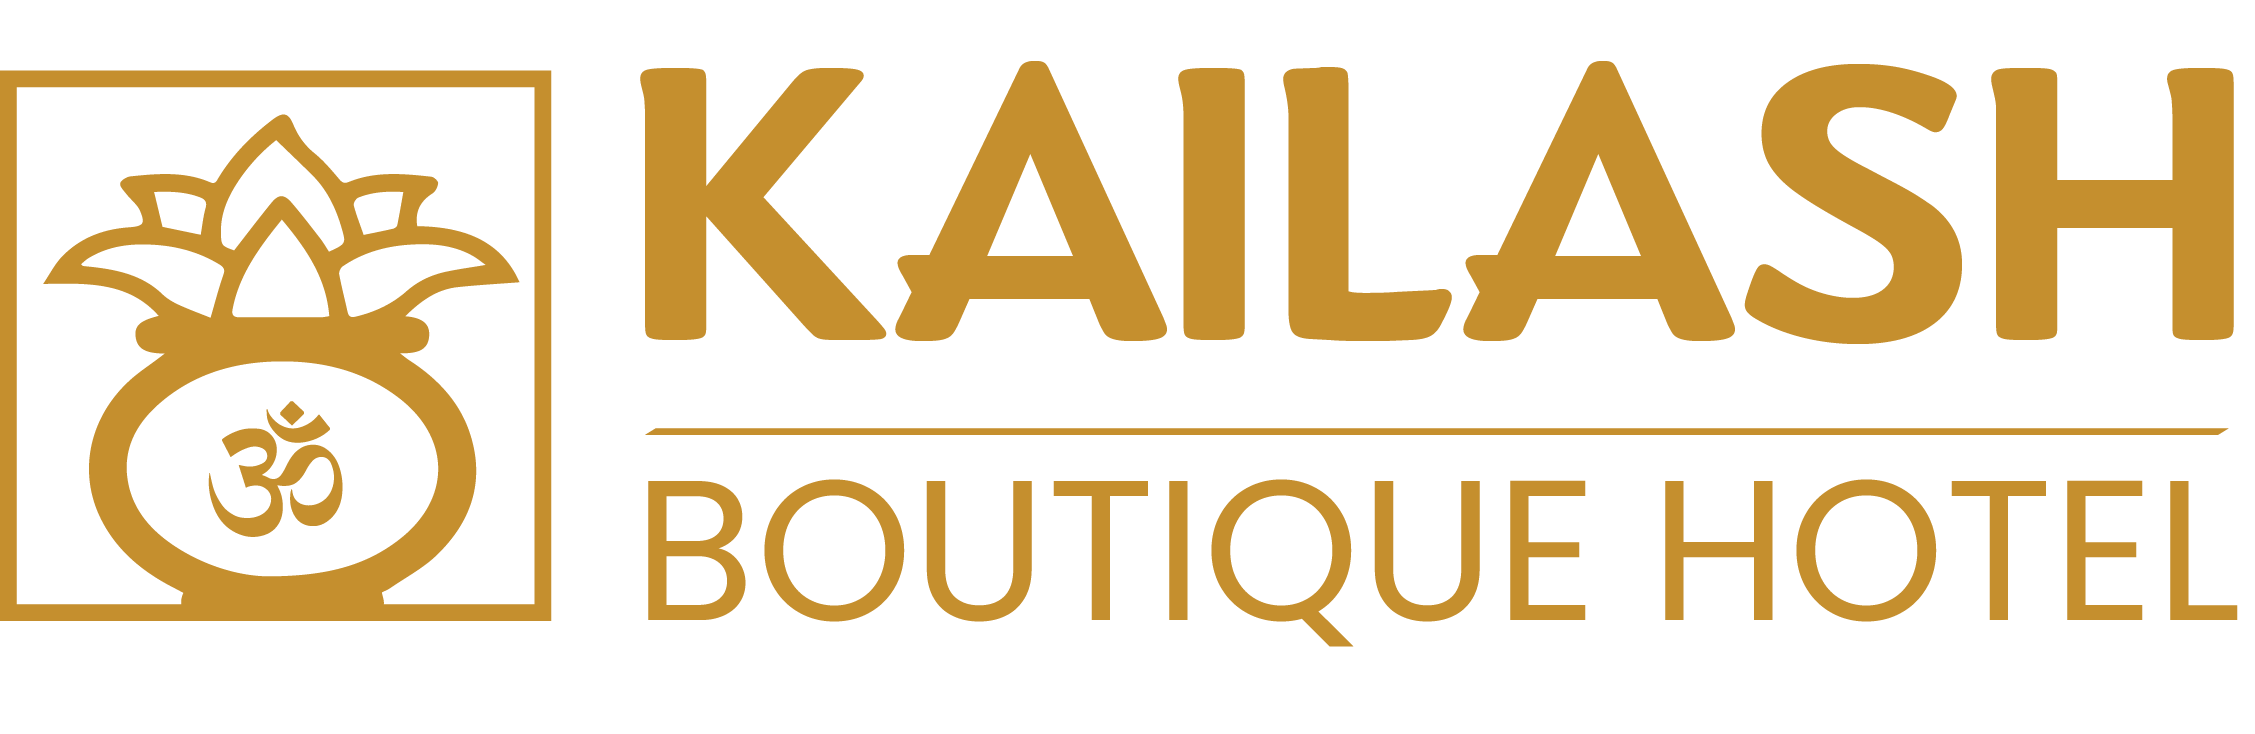 Kailash Boutique Hotel Logo